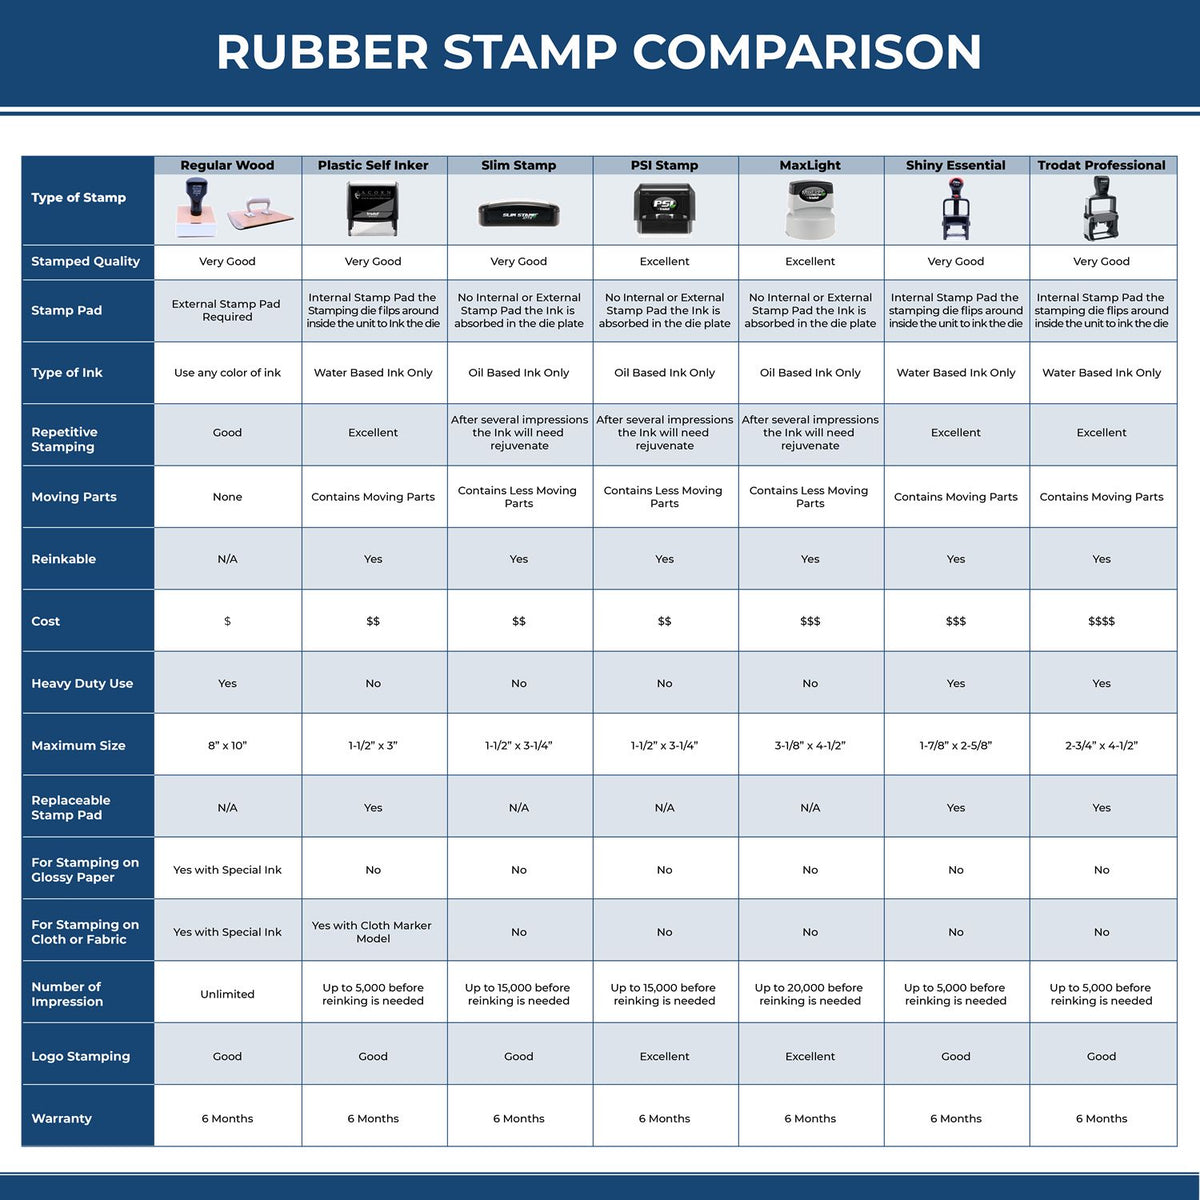 Large Refinance Rubber Stamp 4580R Rubber Stamp Comparison